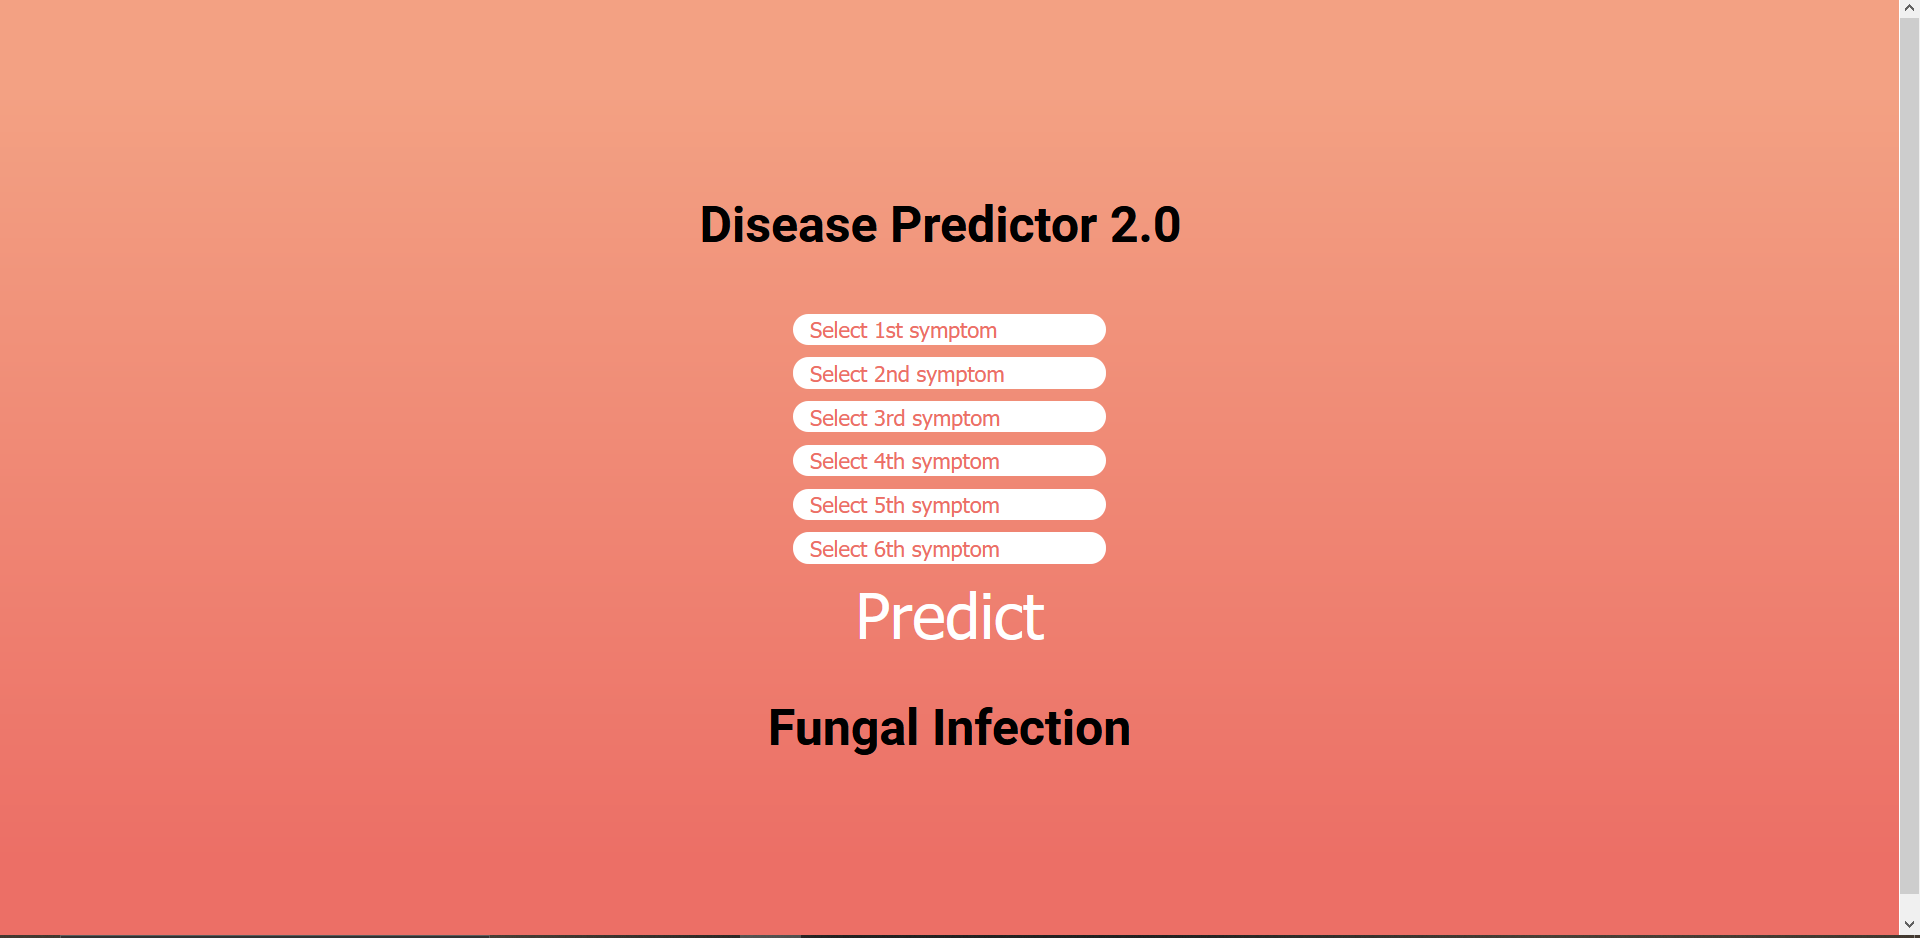 Disease Prediction using Machine Learning